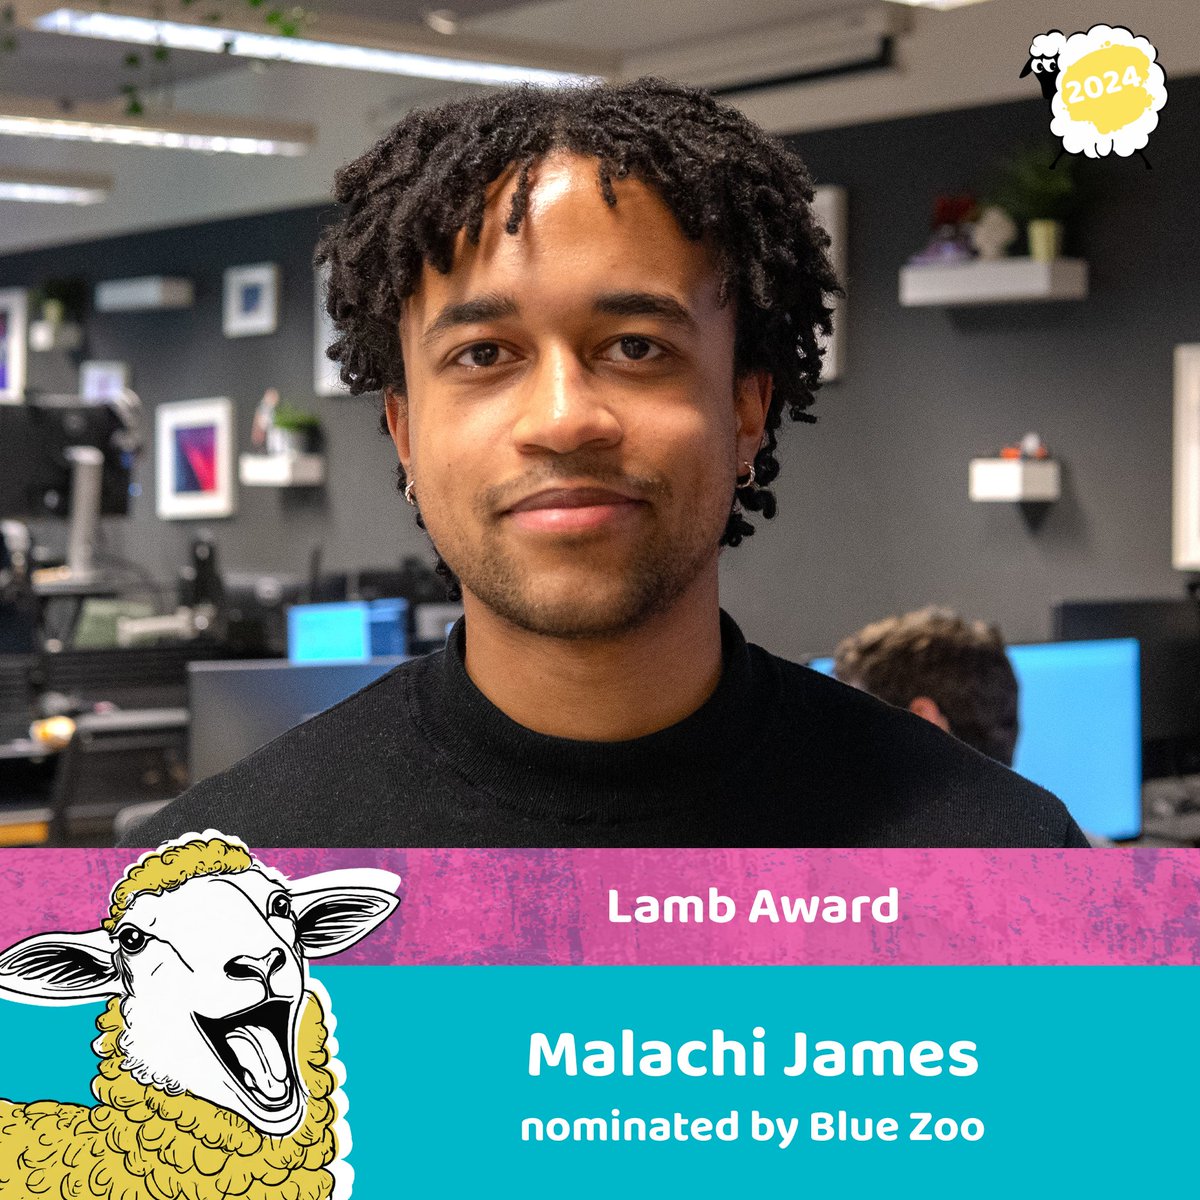 Enormous congratulations to Lamb Award winner Malachi James, nominated by Blue Zoo. #BAA24